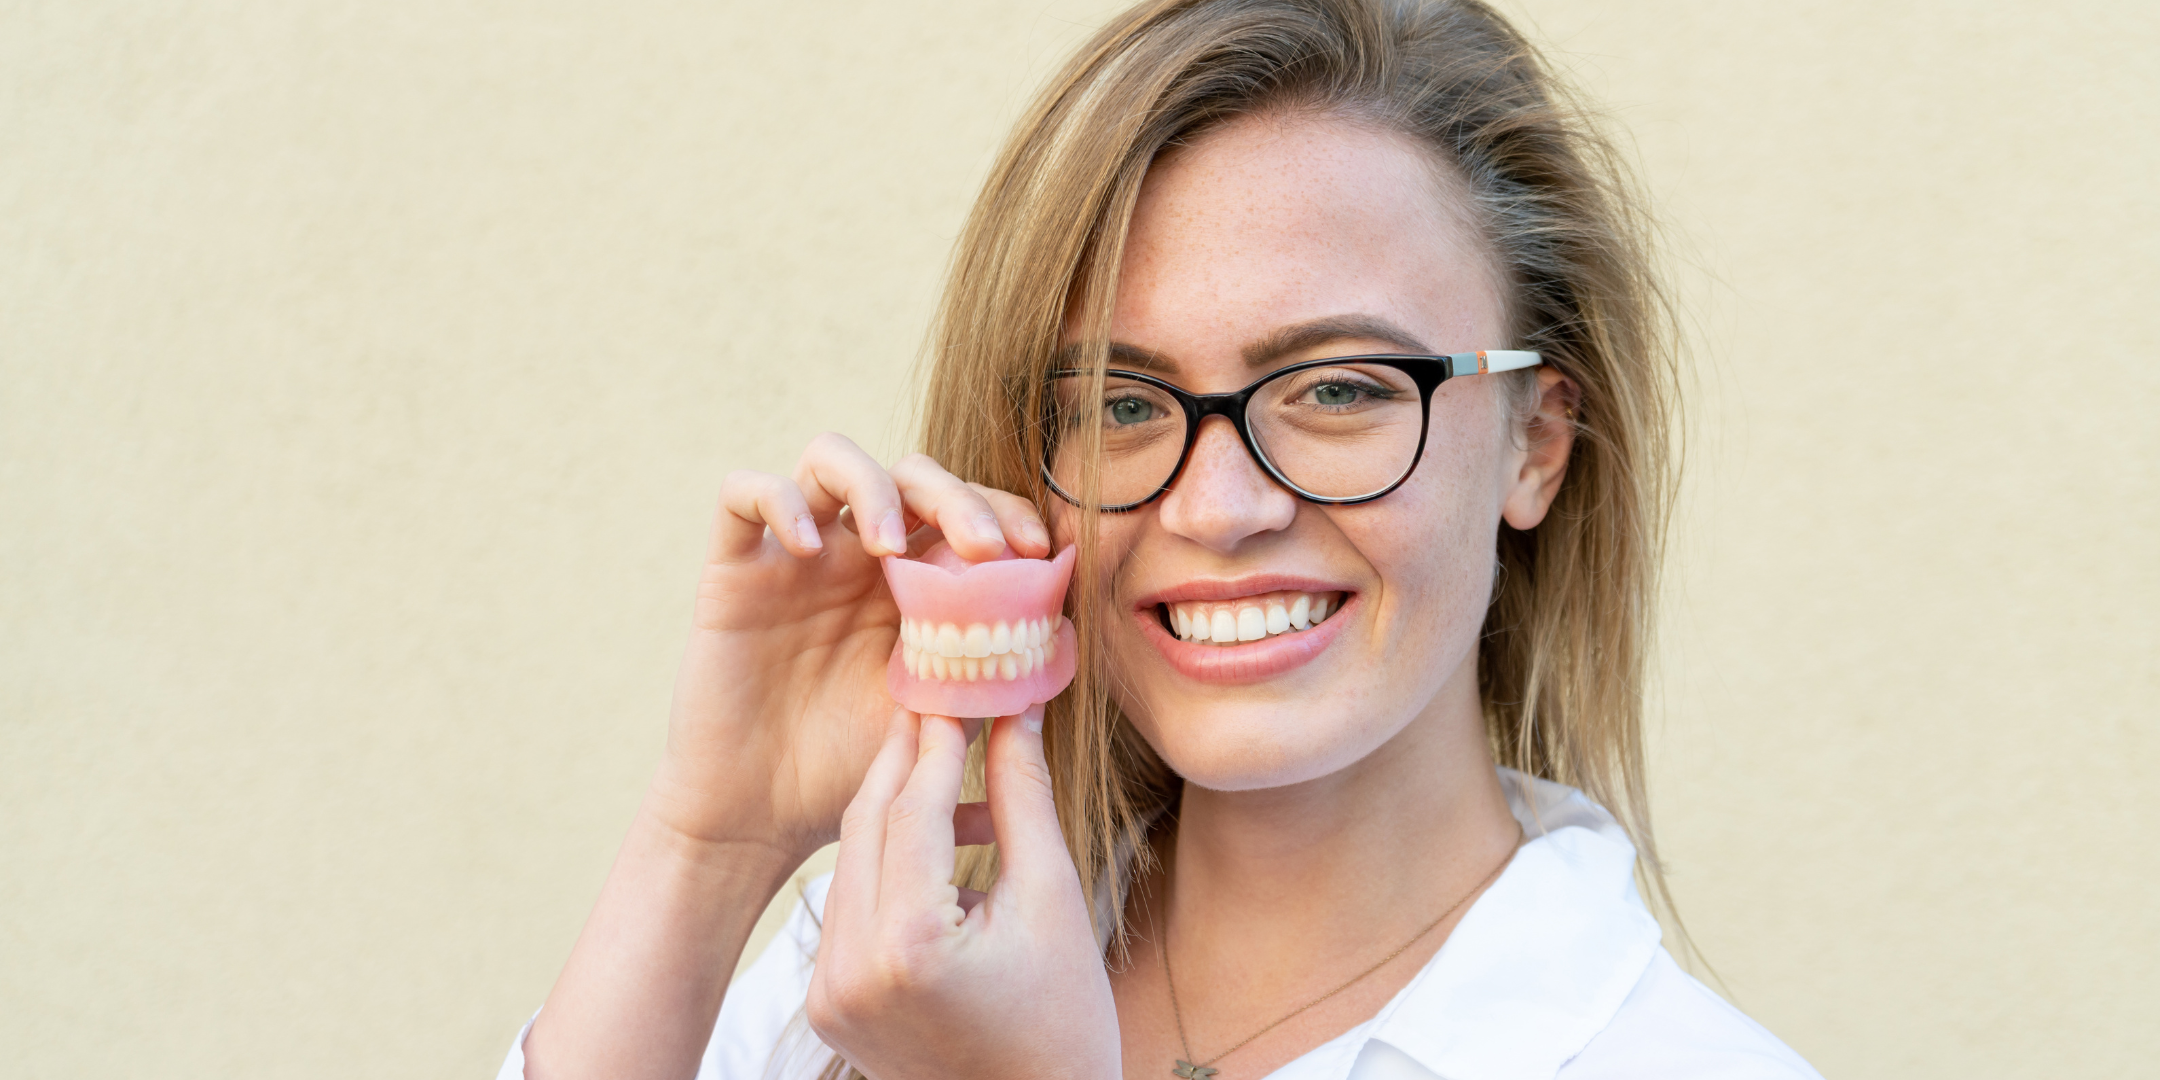 Dentist holds dentures in her hands, smiling